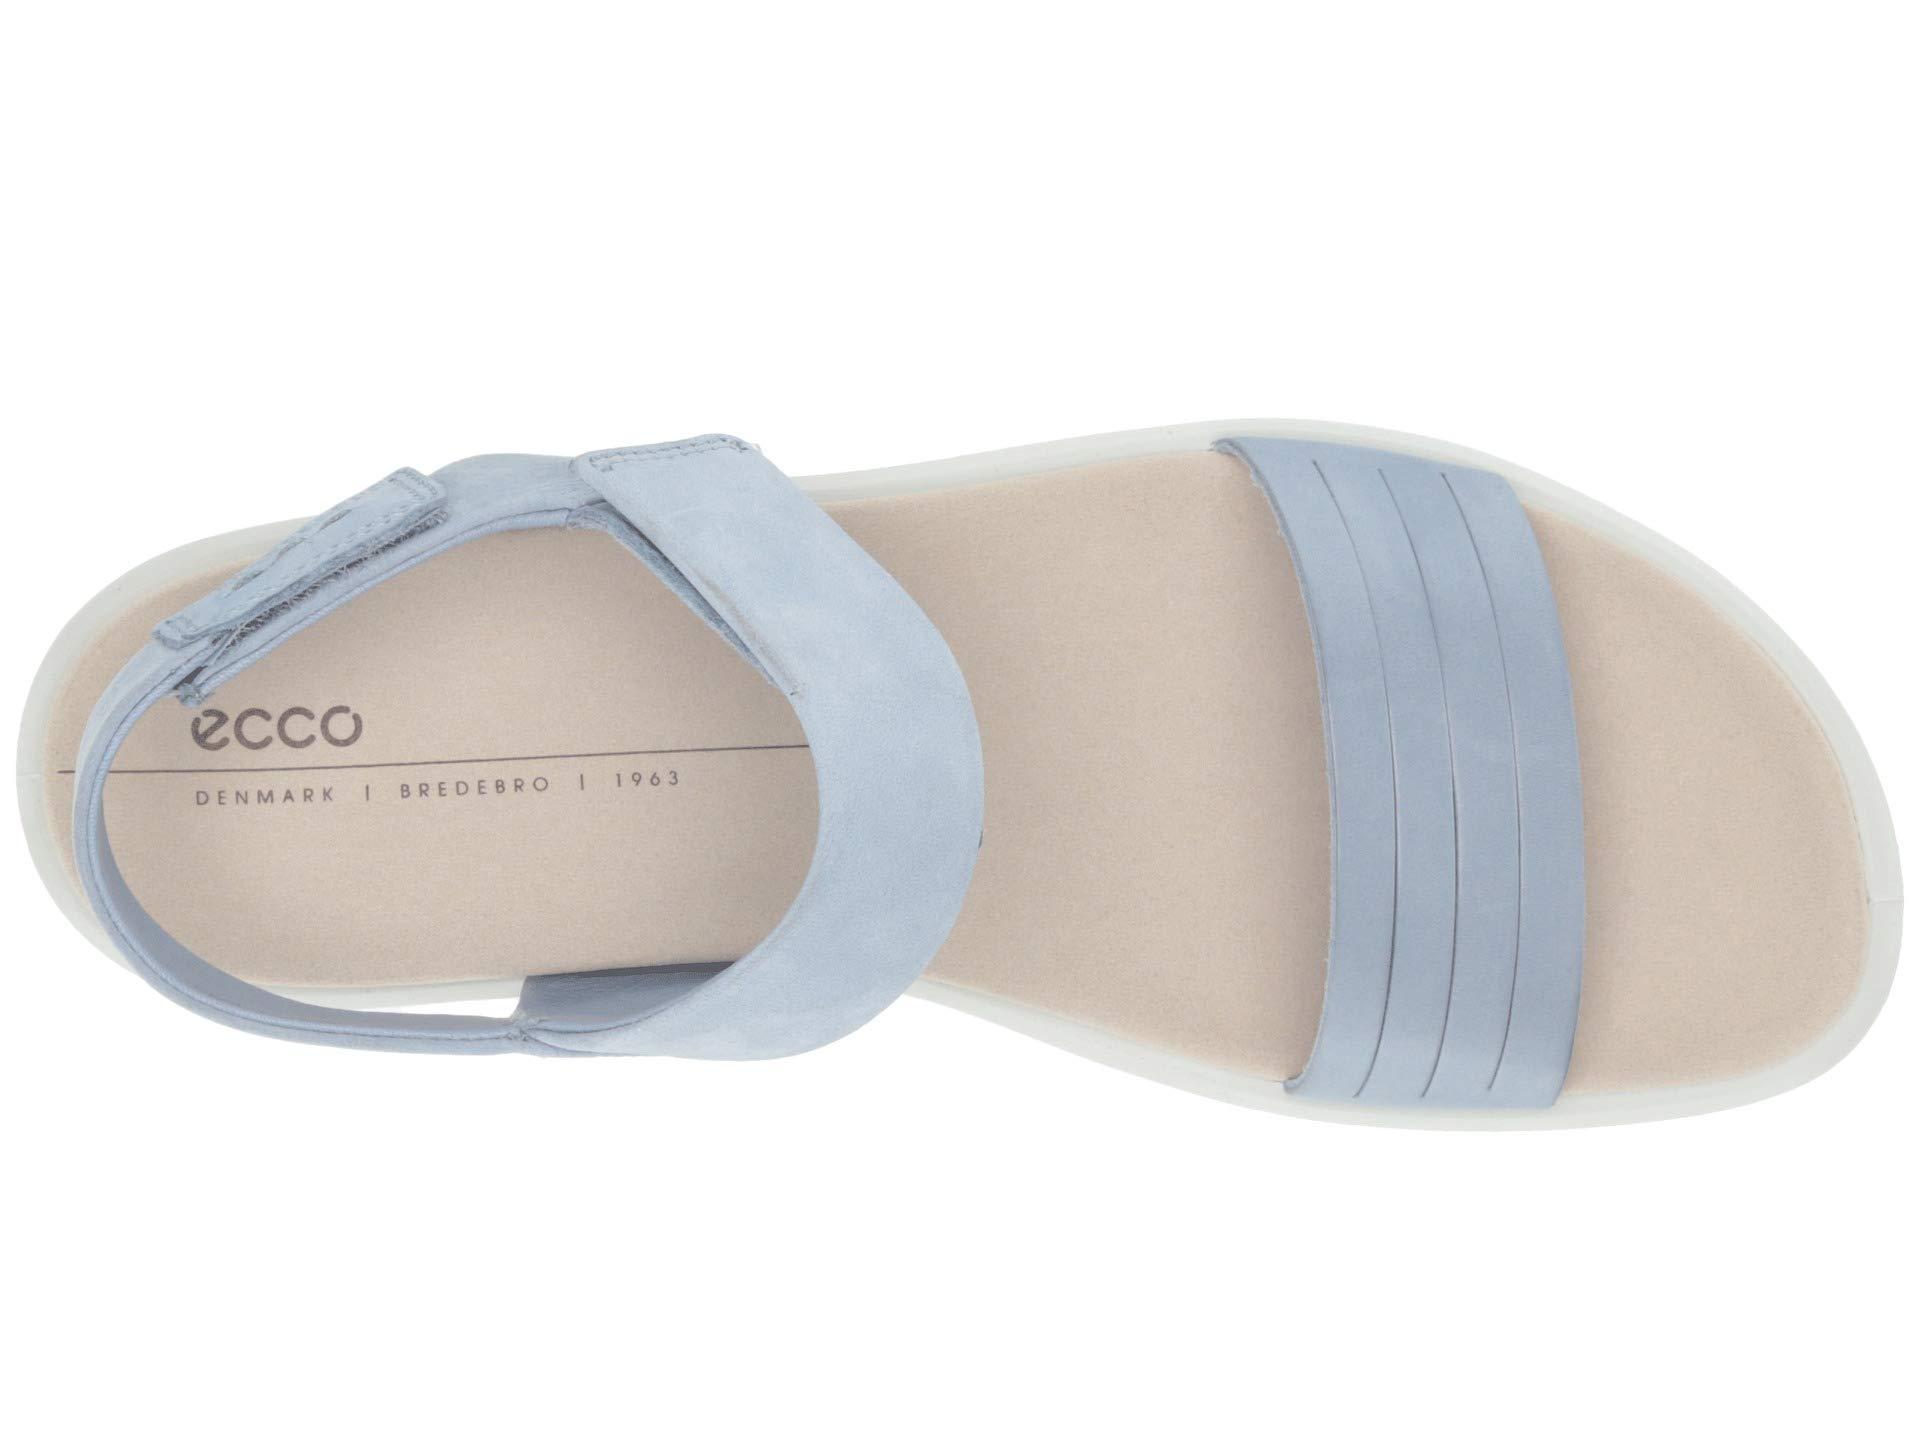 Ecco Leather Flowt Strap Sandal in Dusty Blue/Dusty Blue (Blue) - Save 12%  - Lyst